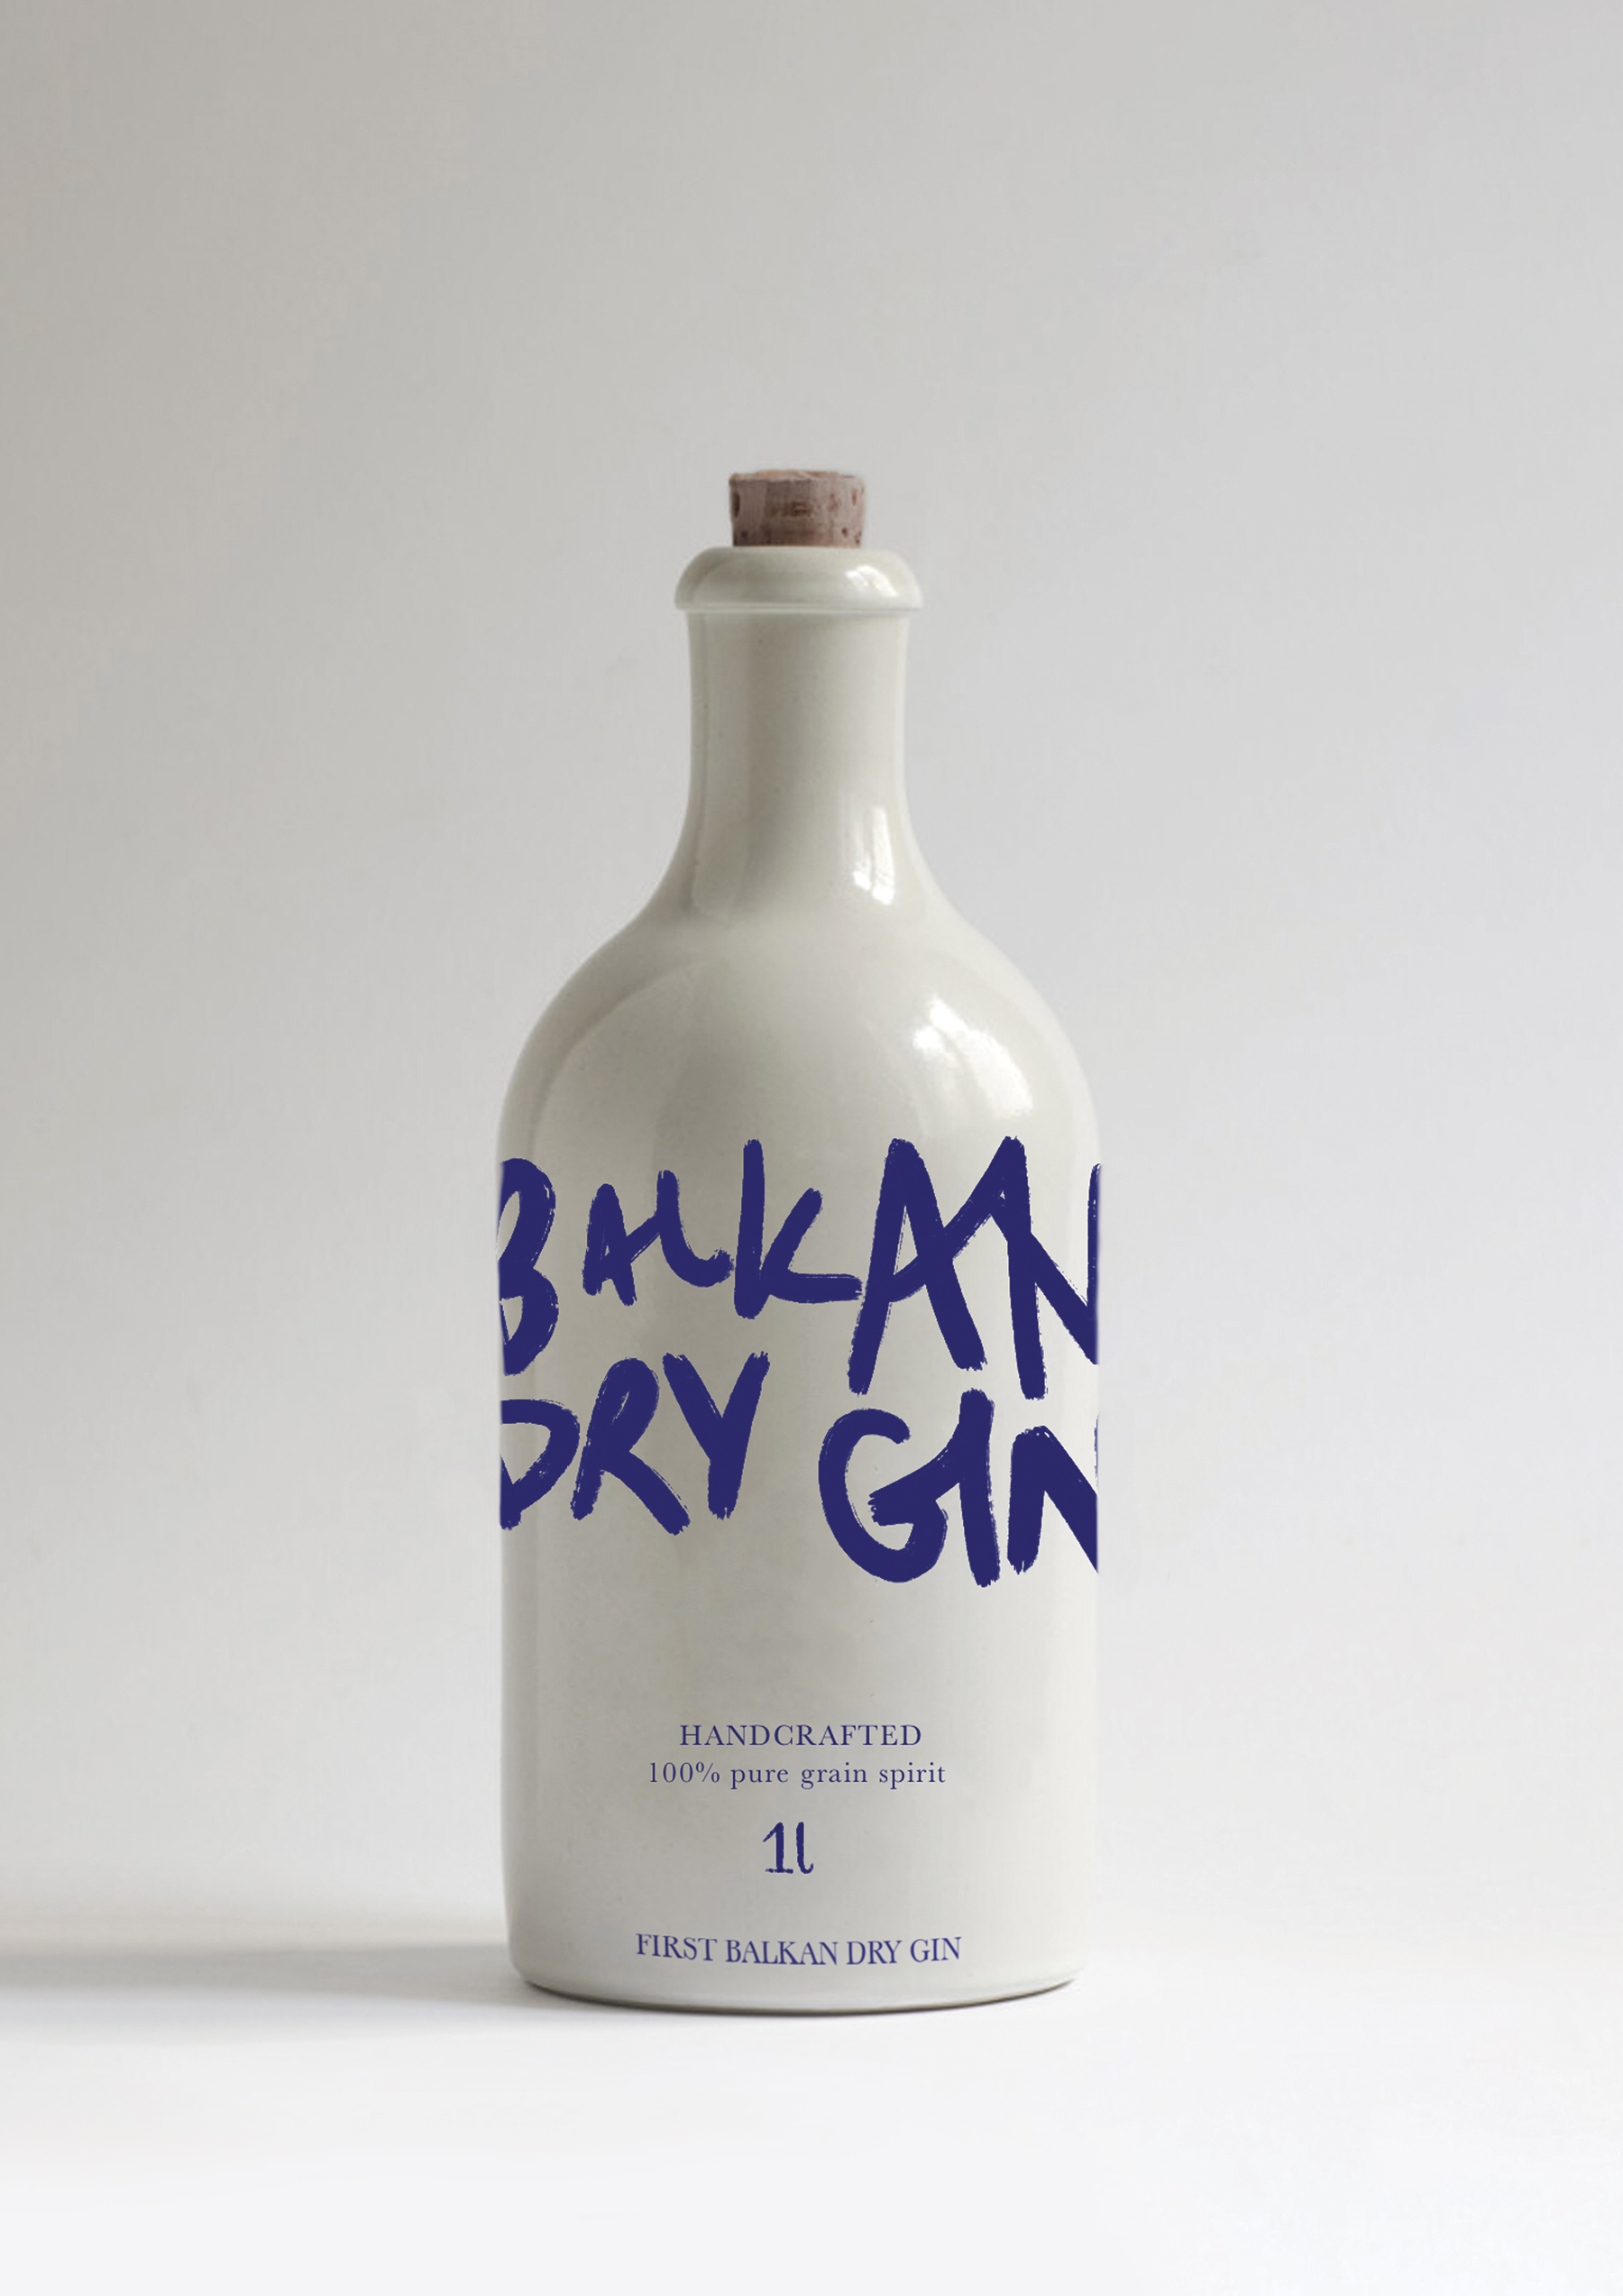 03 first balkan dry gin